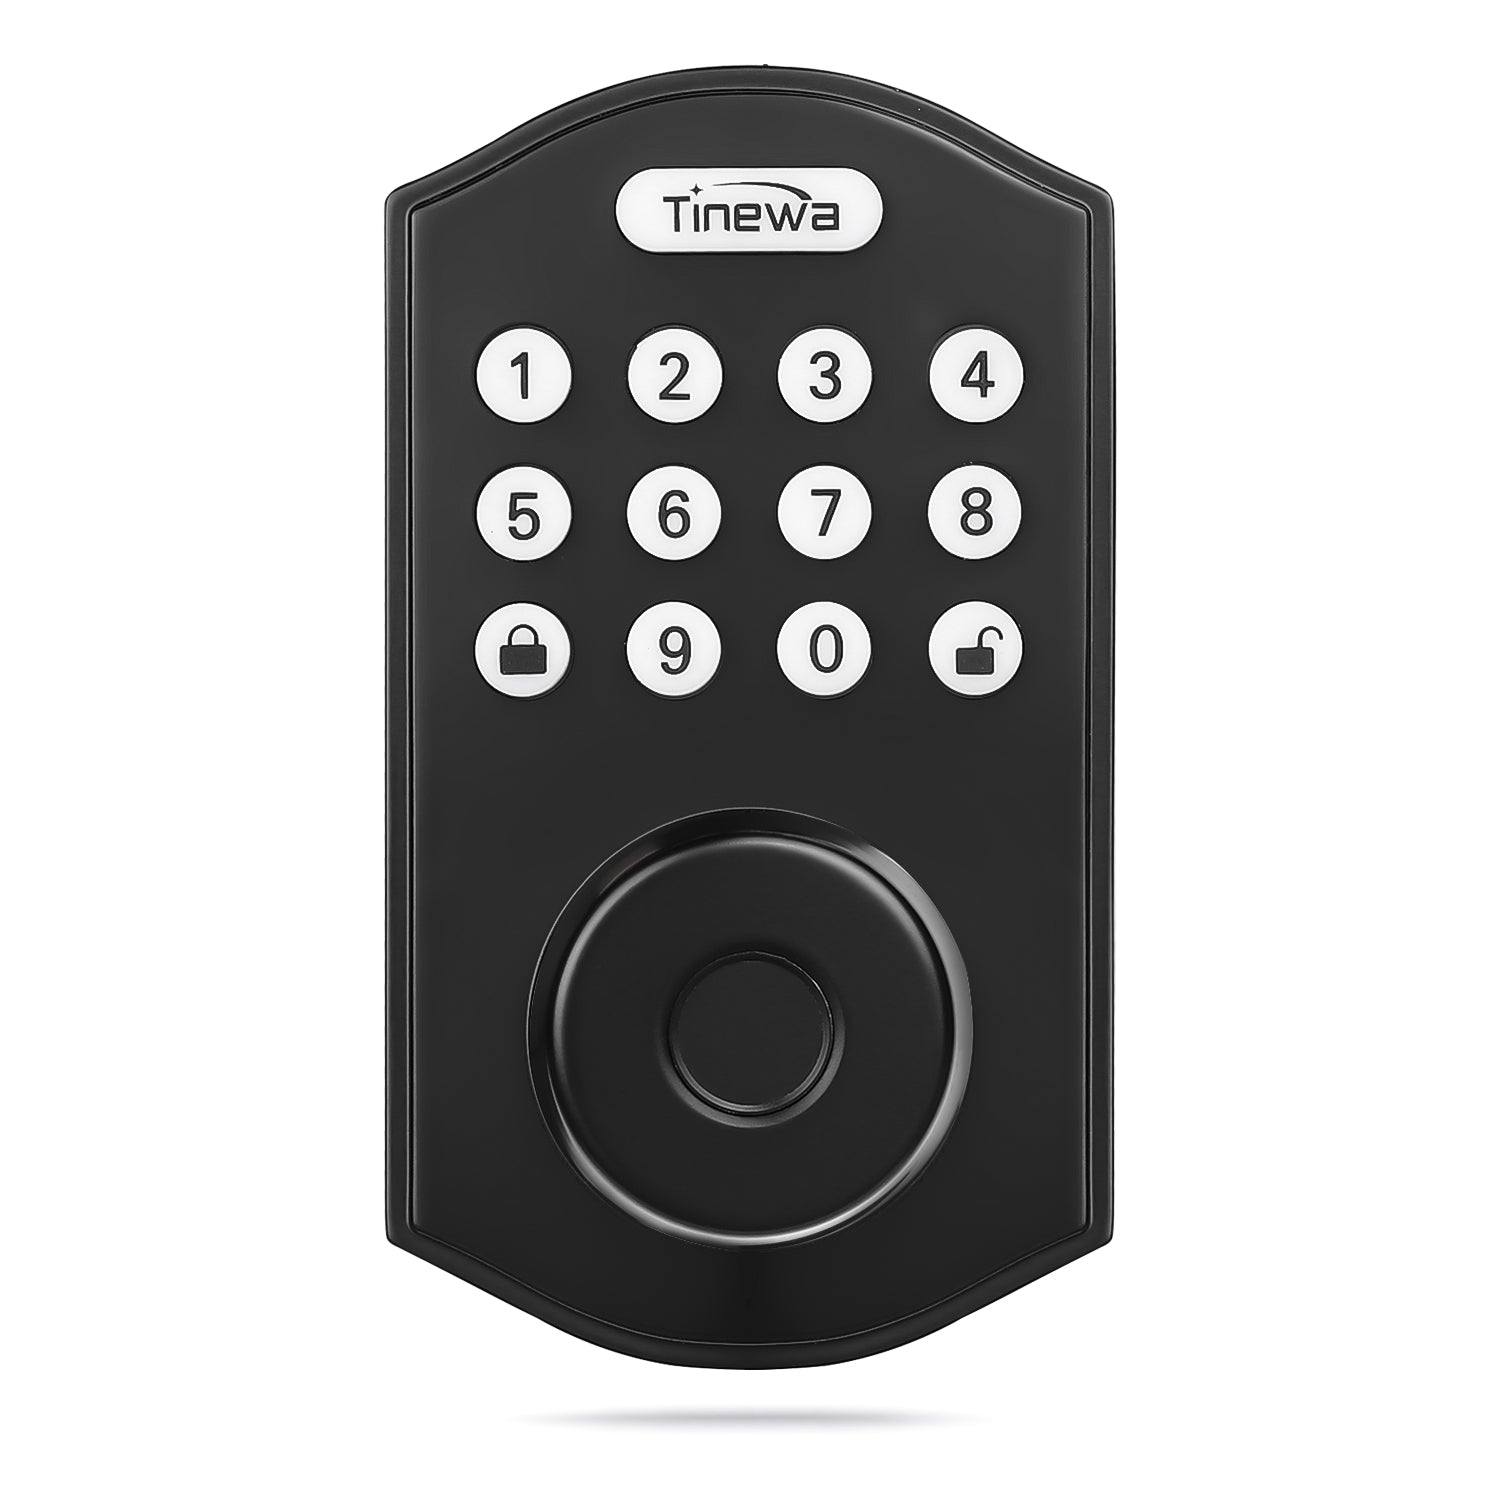 Tinewa Fingerprint Entry Door Lock, Round Smart Lock, Electronic Digit